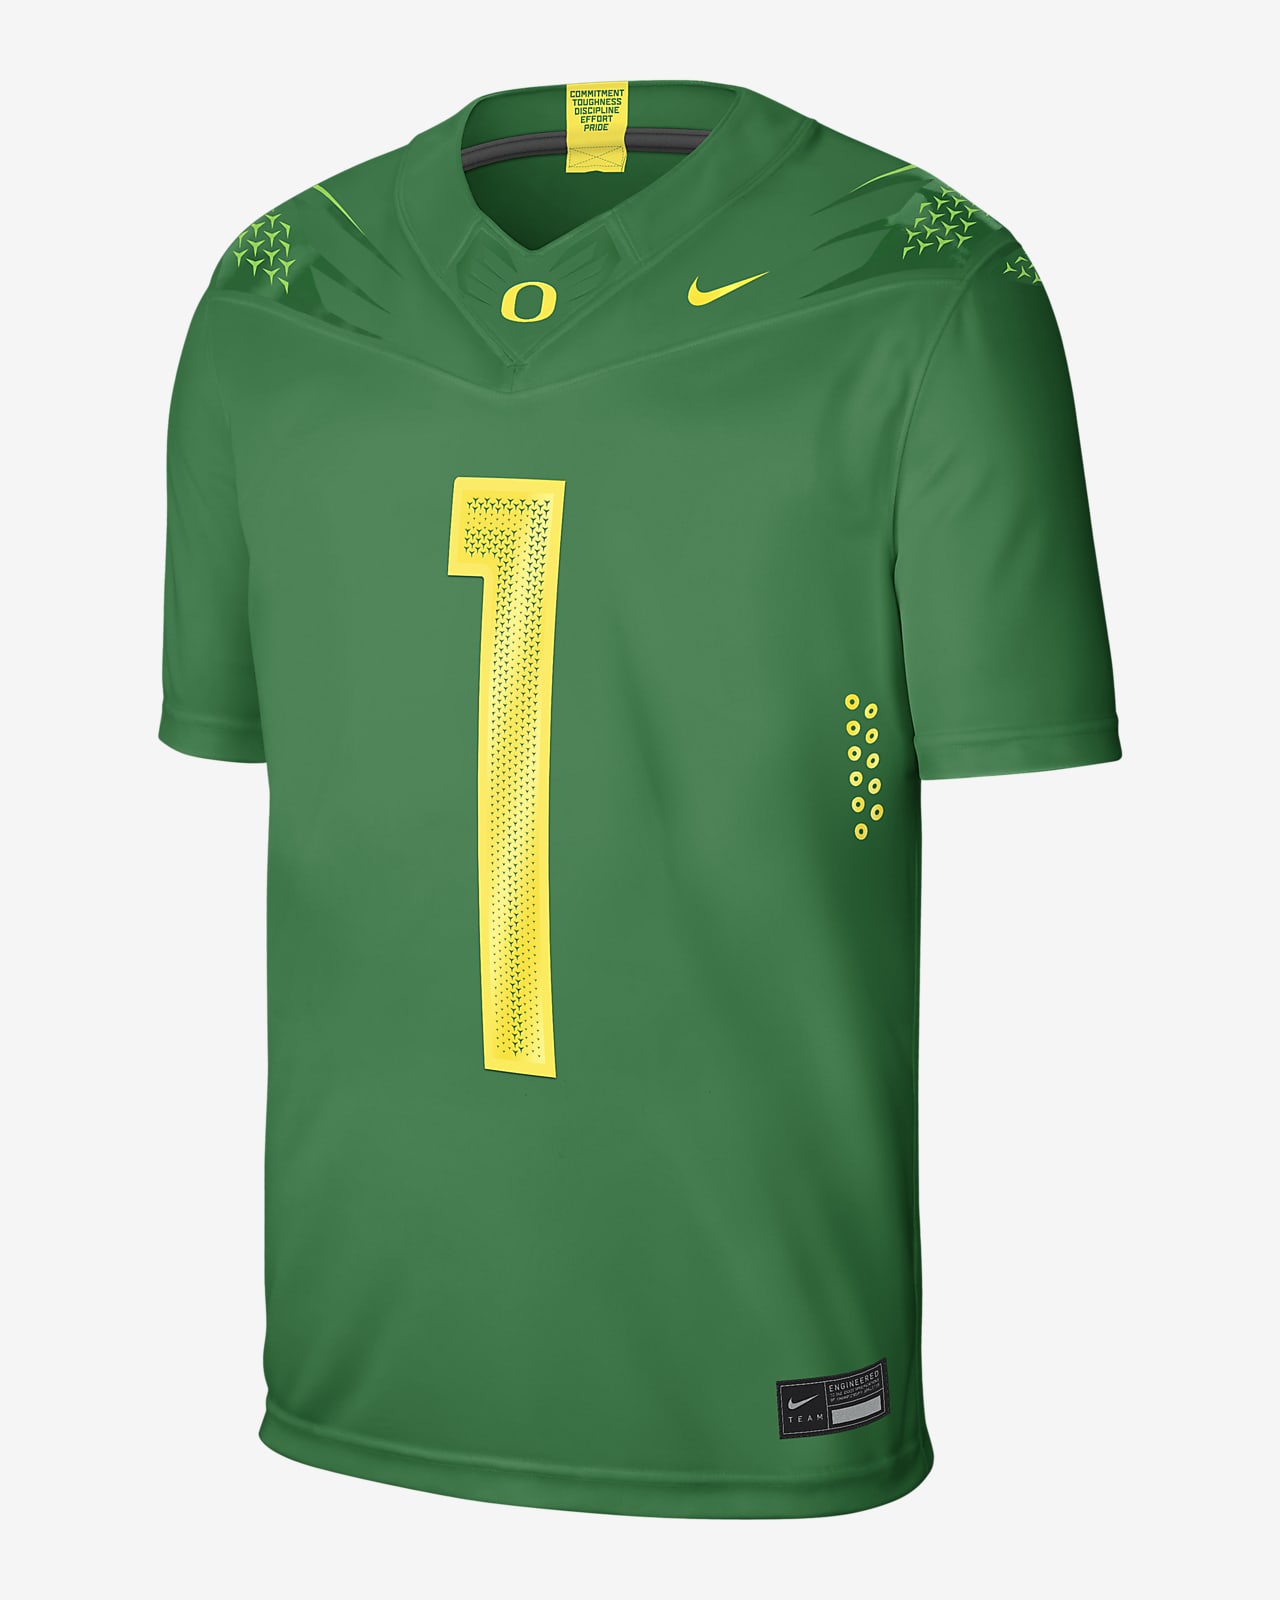 Acercarse irregular Establecer Jersey de fútbol americano Game para hombre Nike College (Oregon) Home.  Nike.com